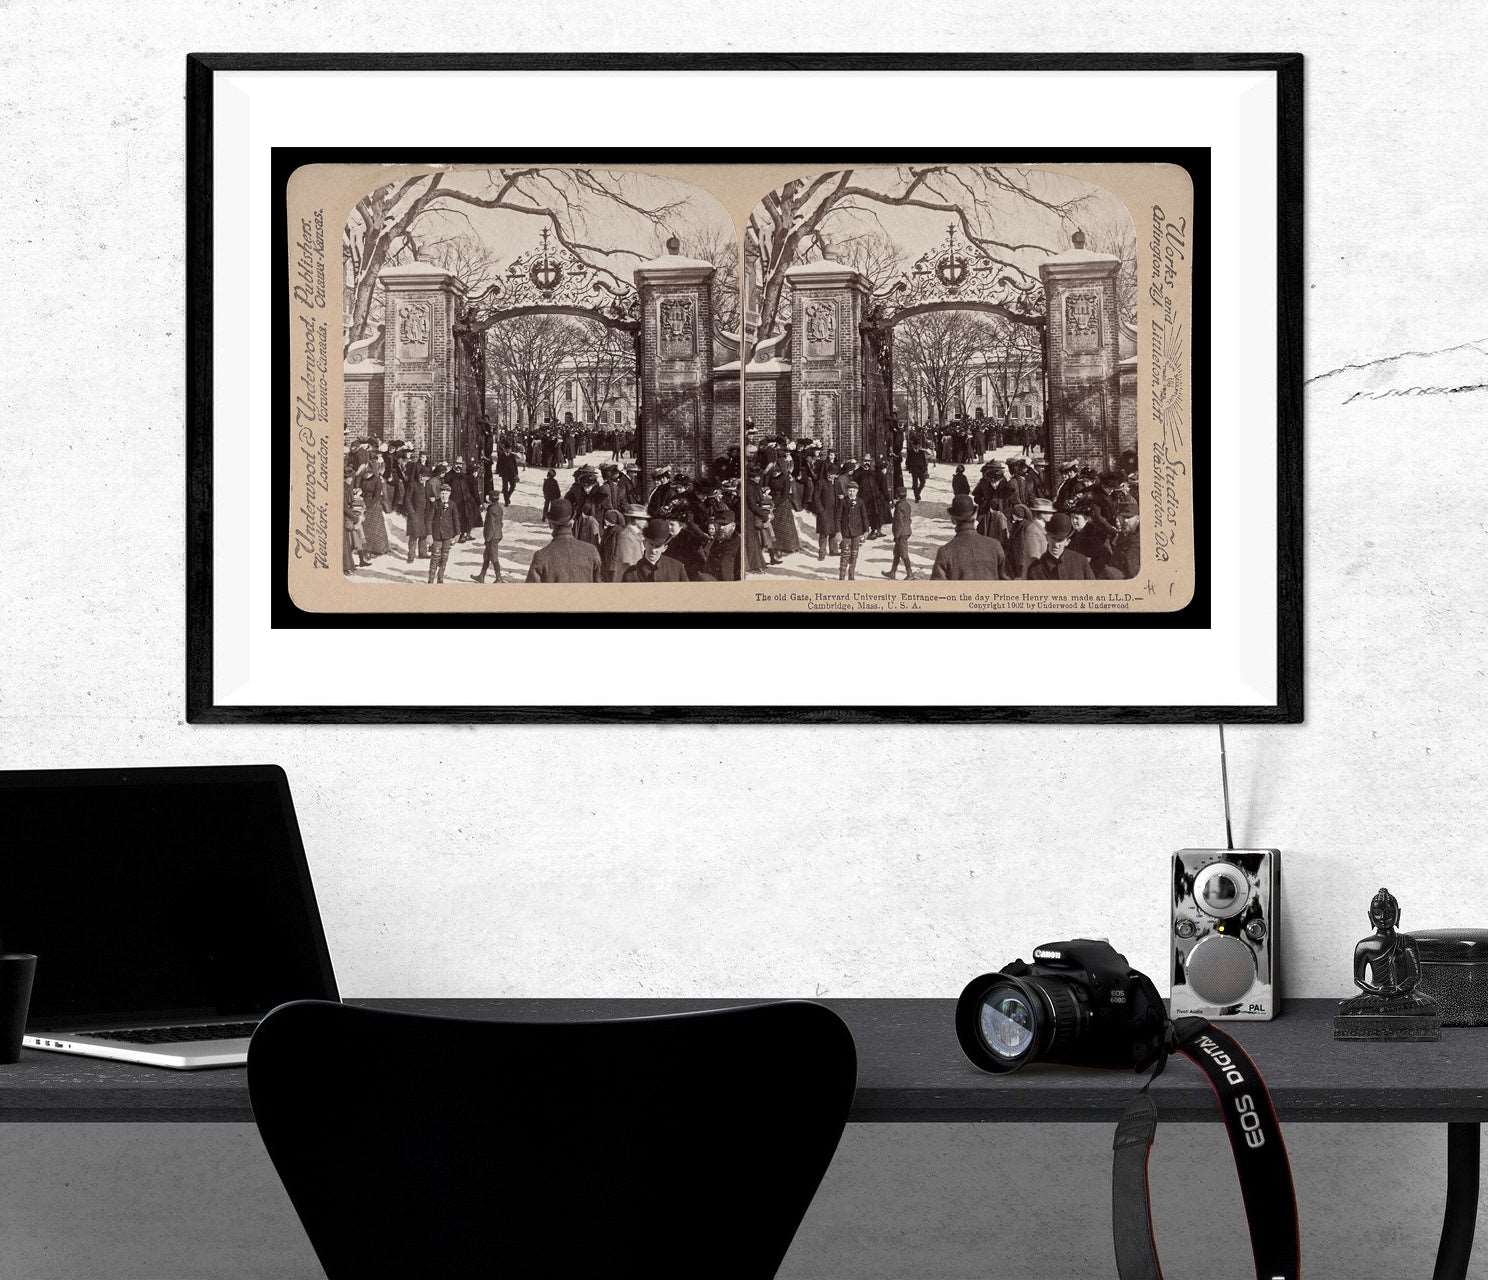 A framed print of a vintage stereograph image hanging above a black desk